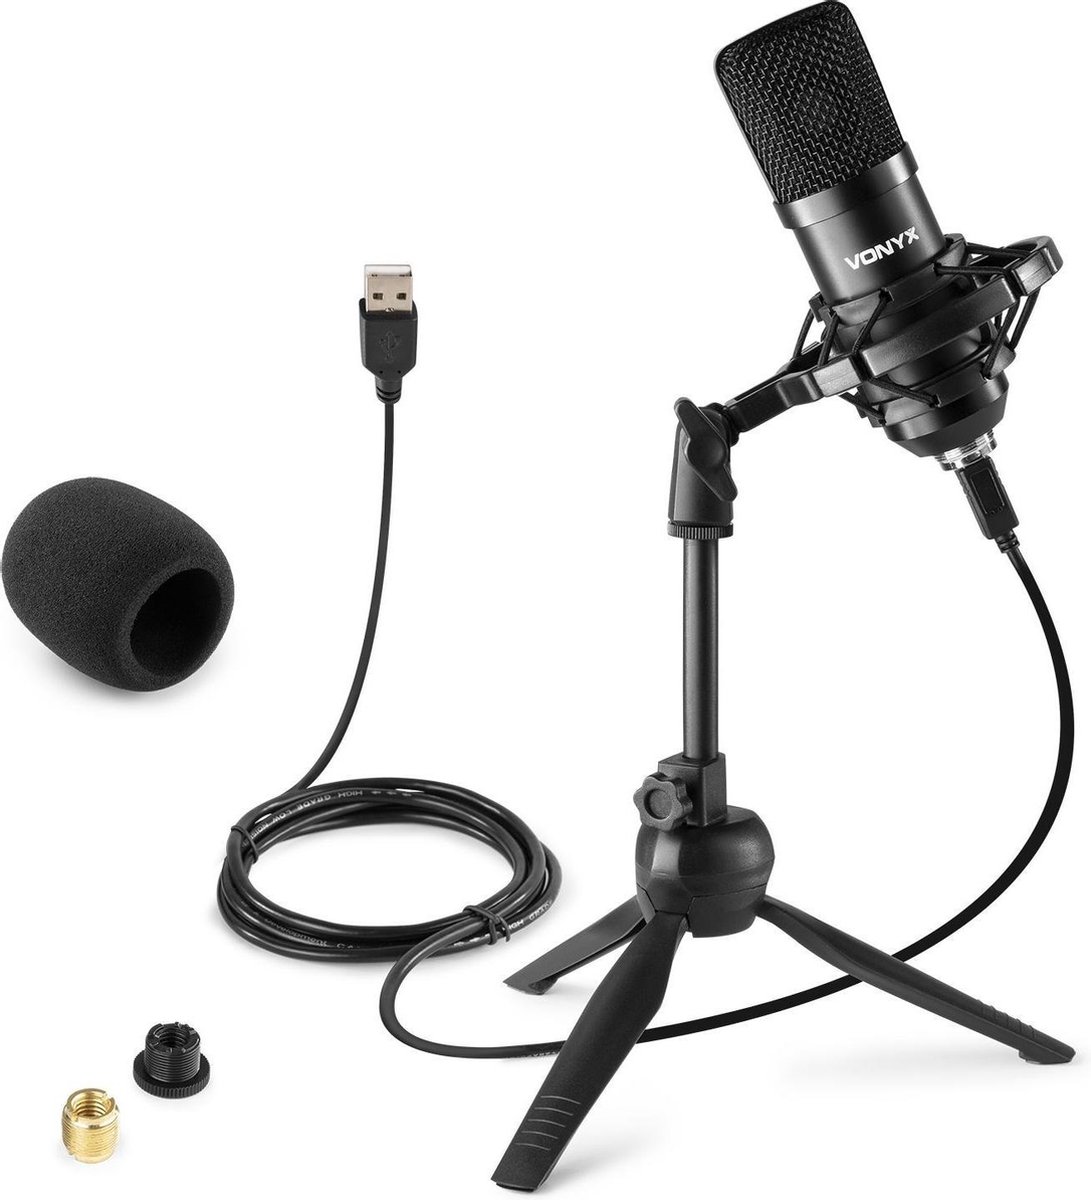 USB microfoon voor pc - Vonyx CM300B - USB studio microfoon incl. tafelstandaard - Zwart